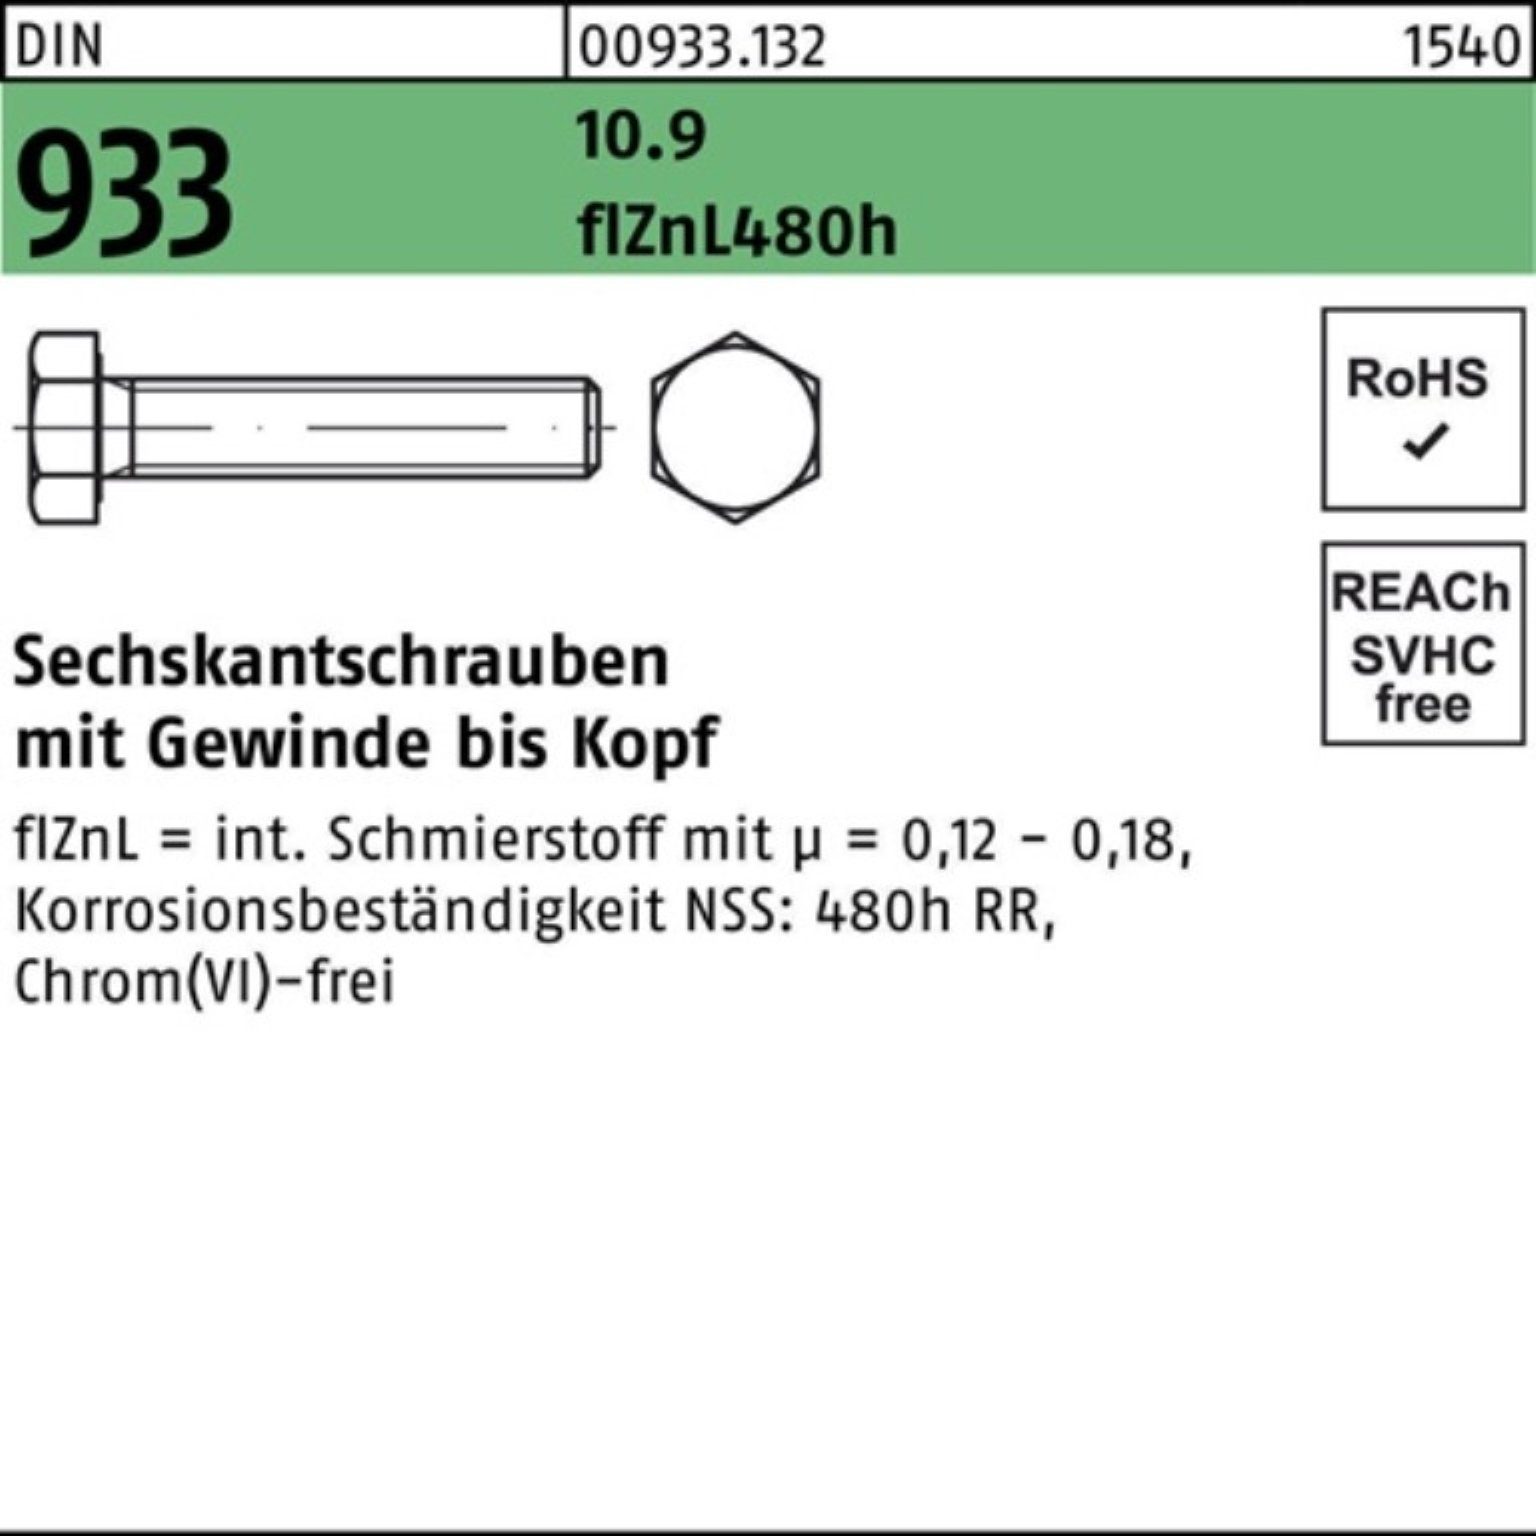 55 100er 10.9 Pack Sechskantschraube M20x 933 Reyher VG DIN Sechskantschraube flZnL/nc/x/x/480h